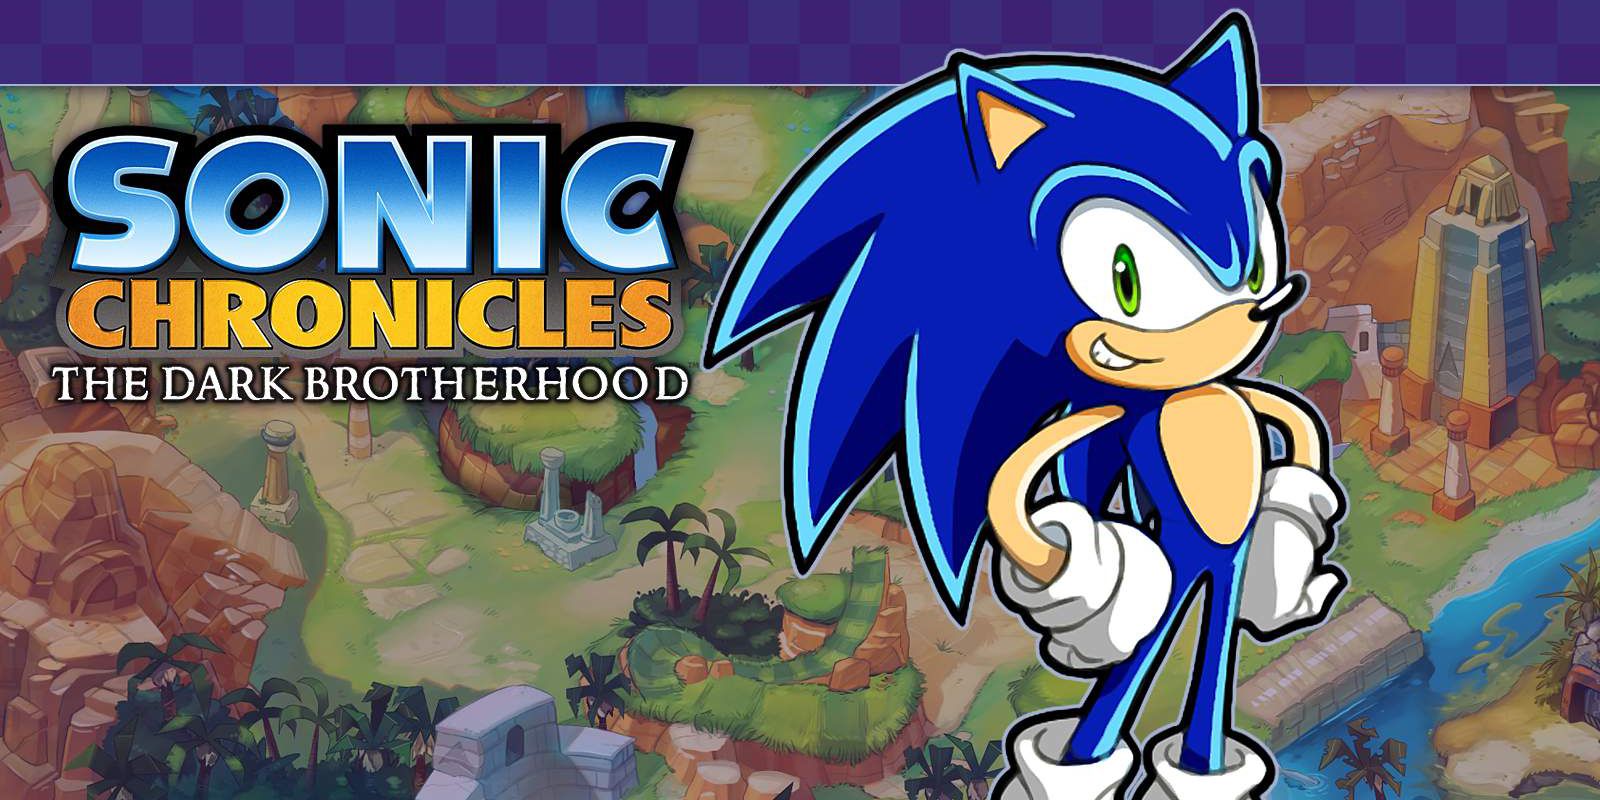 Sonic Chronicles the dark brotherhood